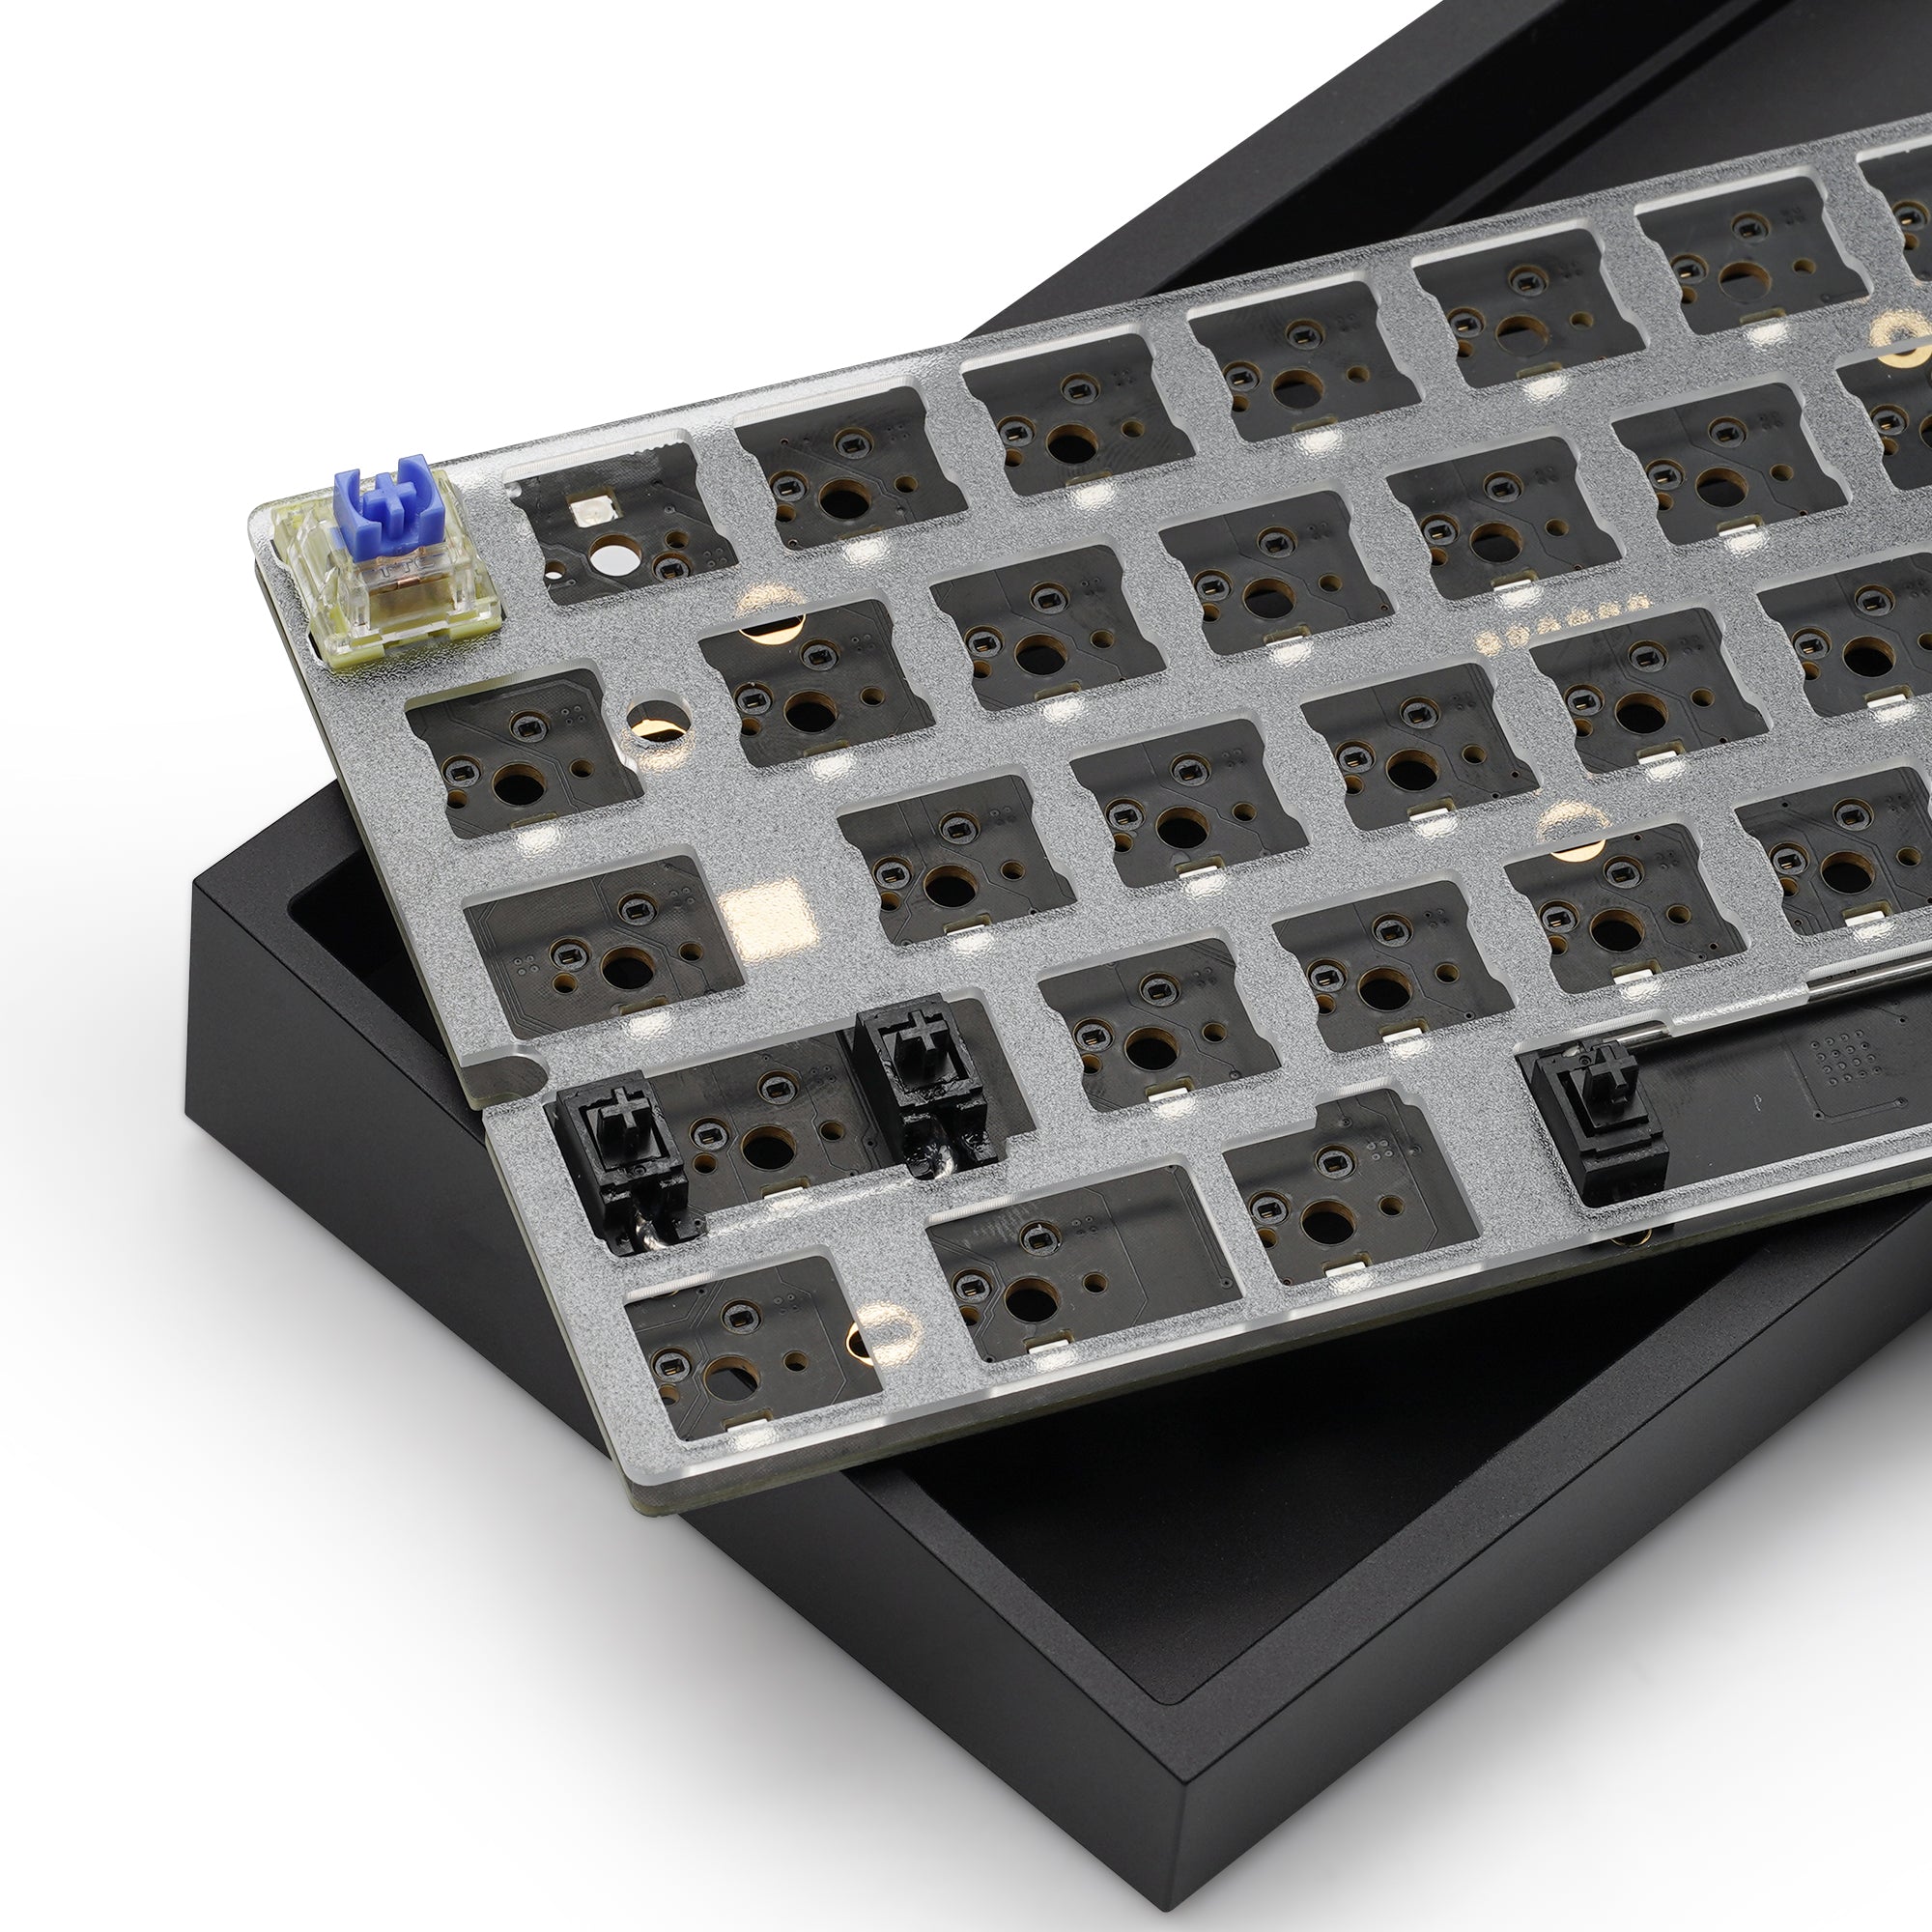 Tofu60 DZ60RGB V2 Hot-swap Keyboard Kit – KBDfans® Mechanical 